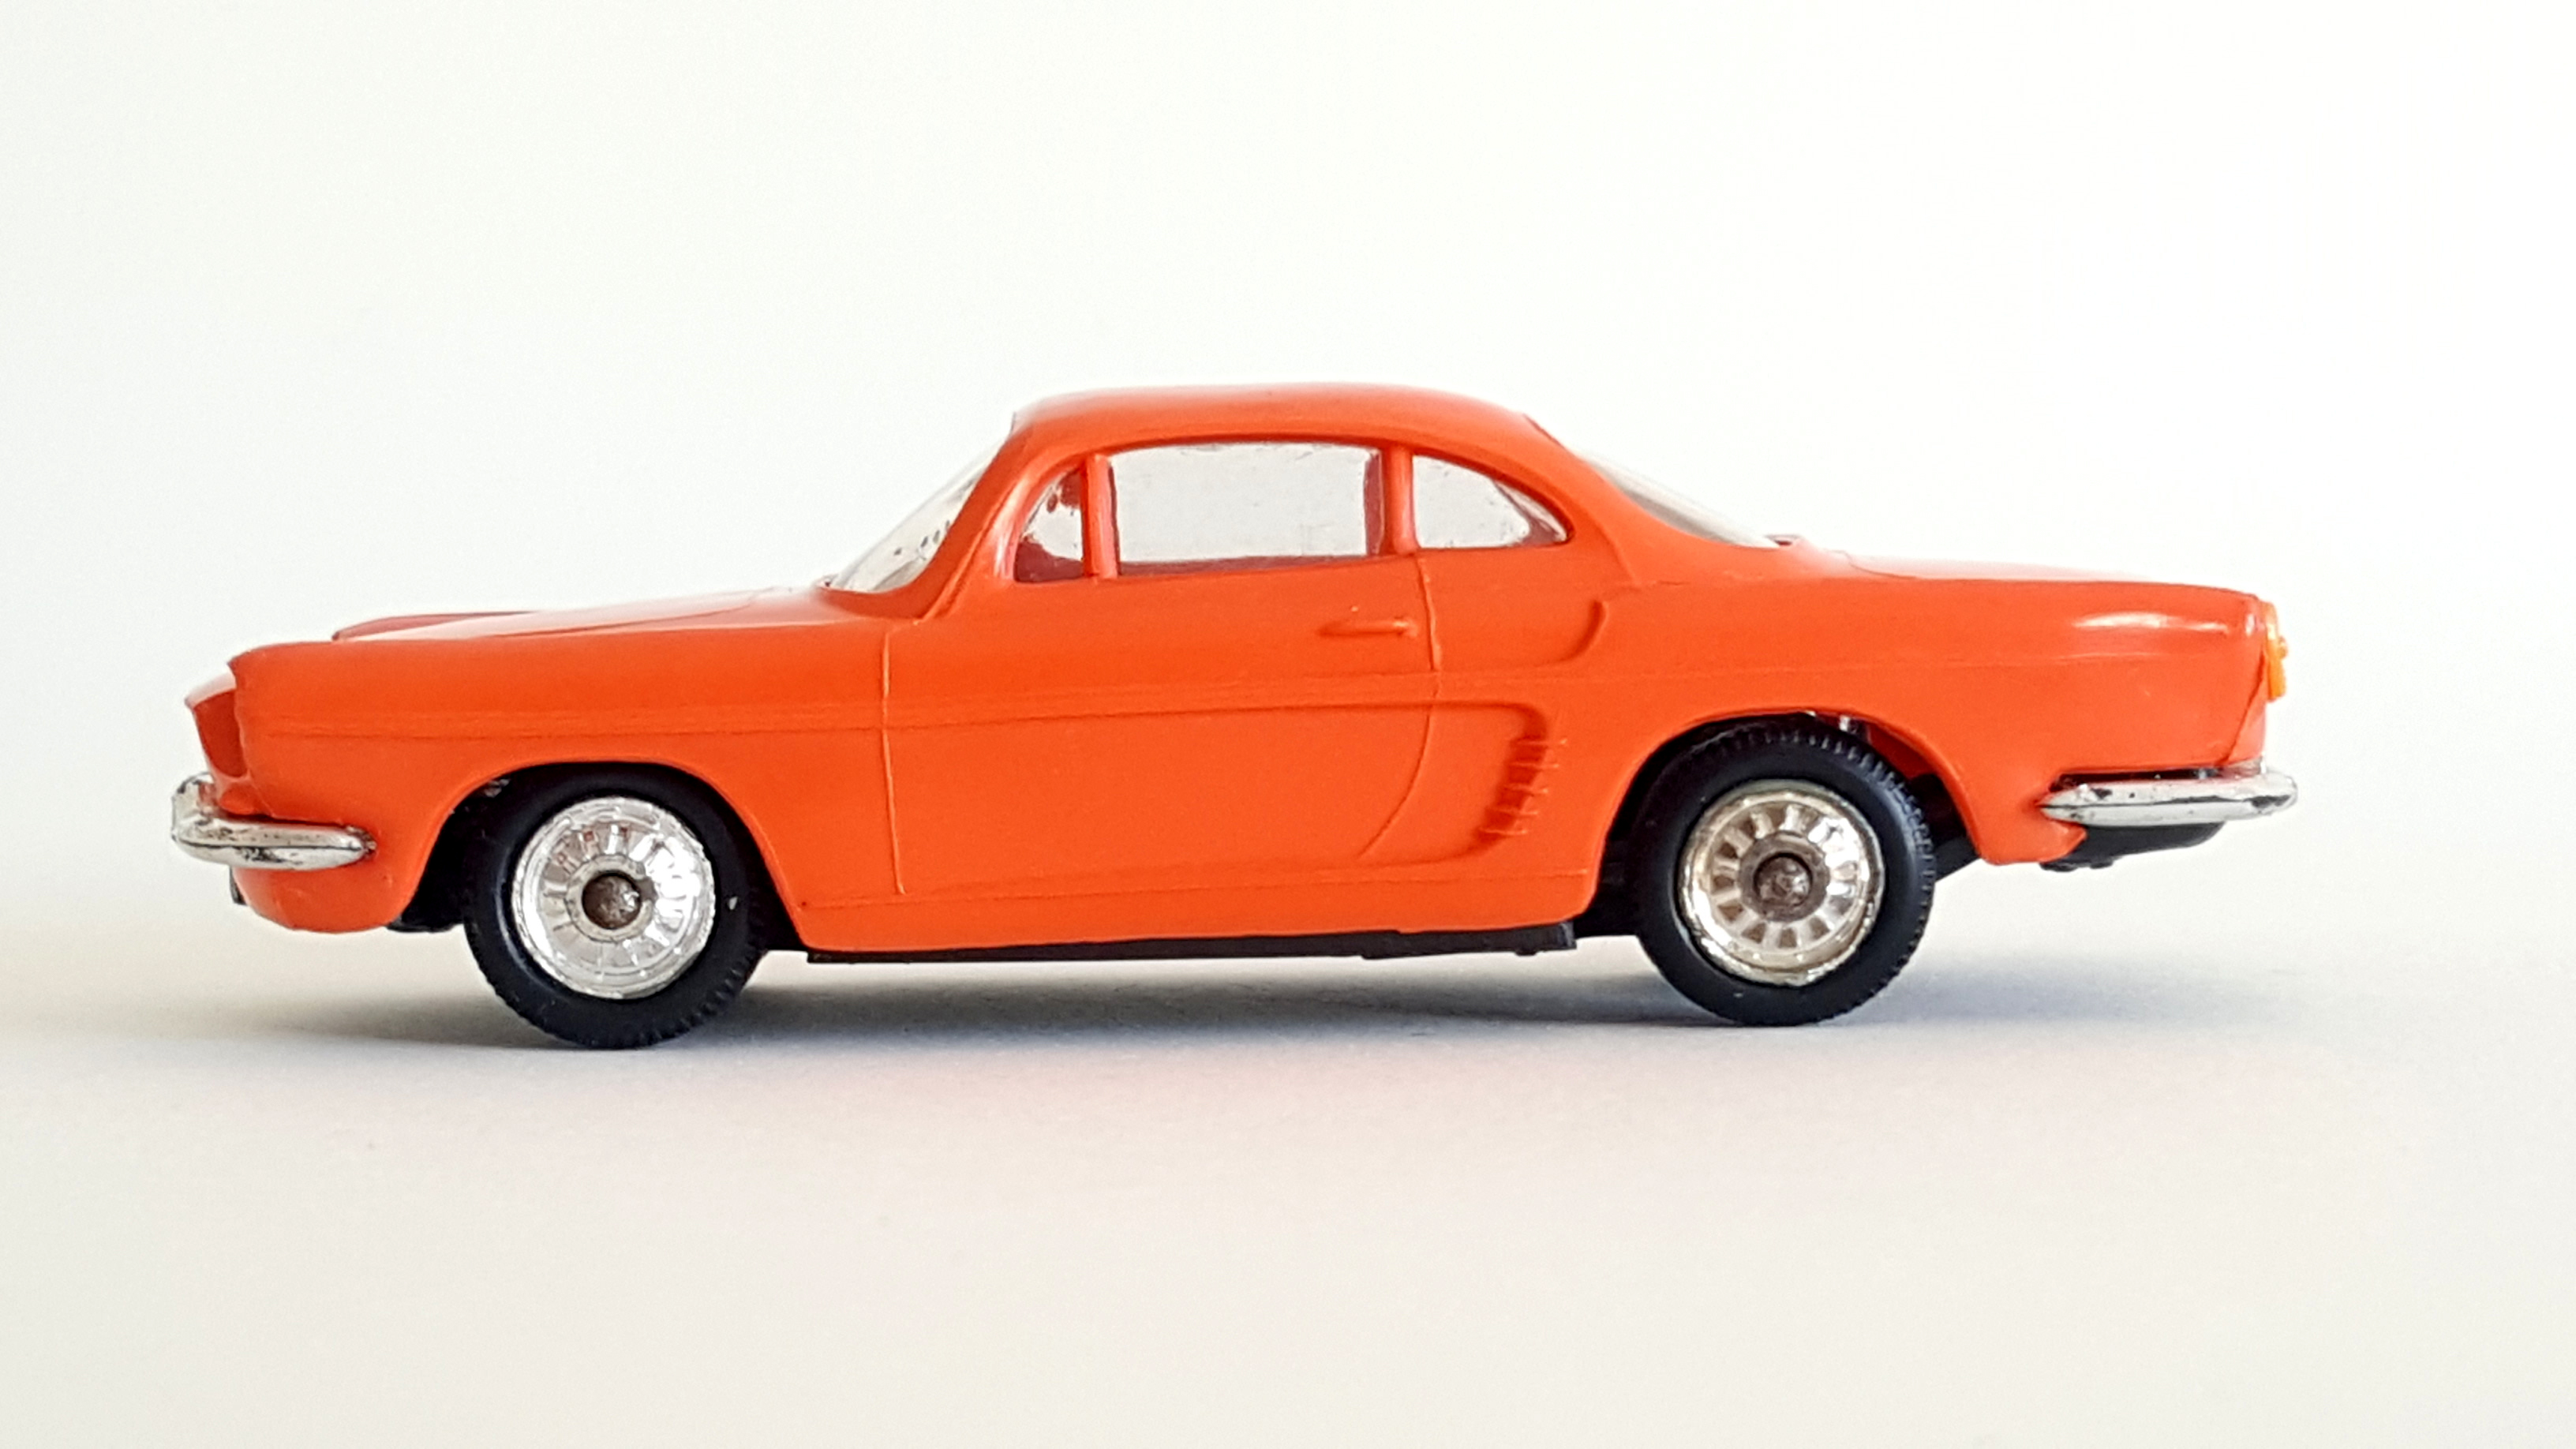 VOITURE CAR miniature Renault floride rouge norev HO 1:87 EUR 11